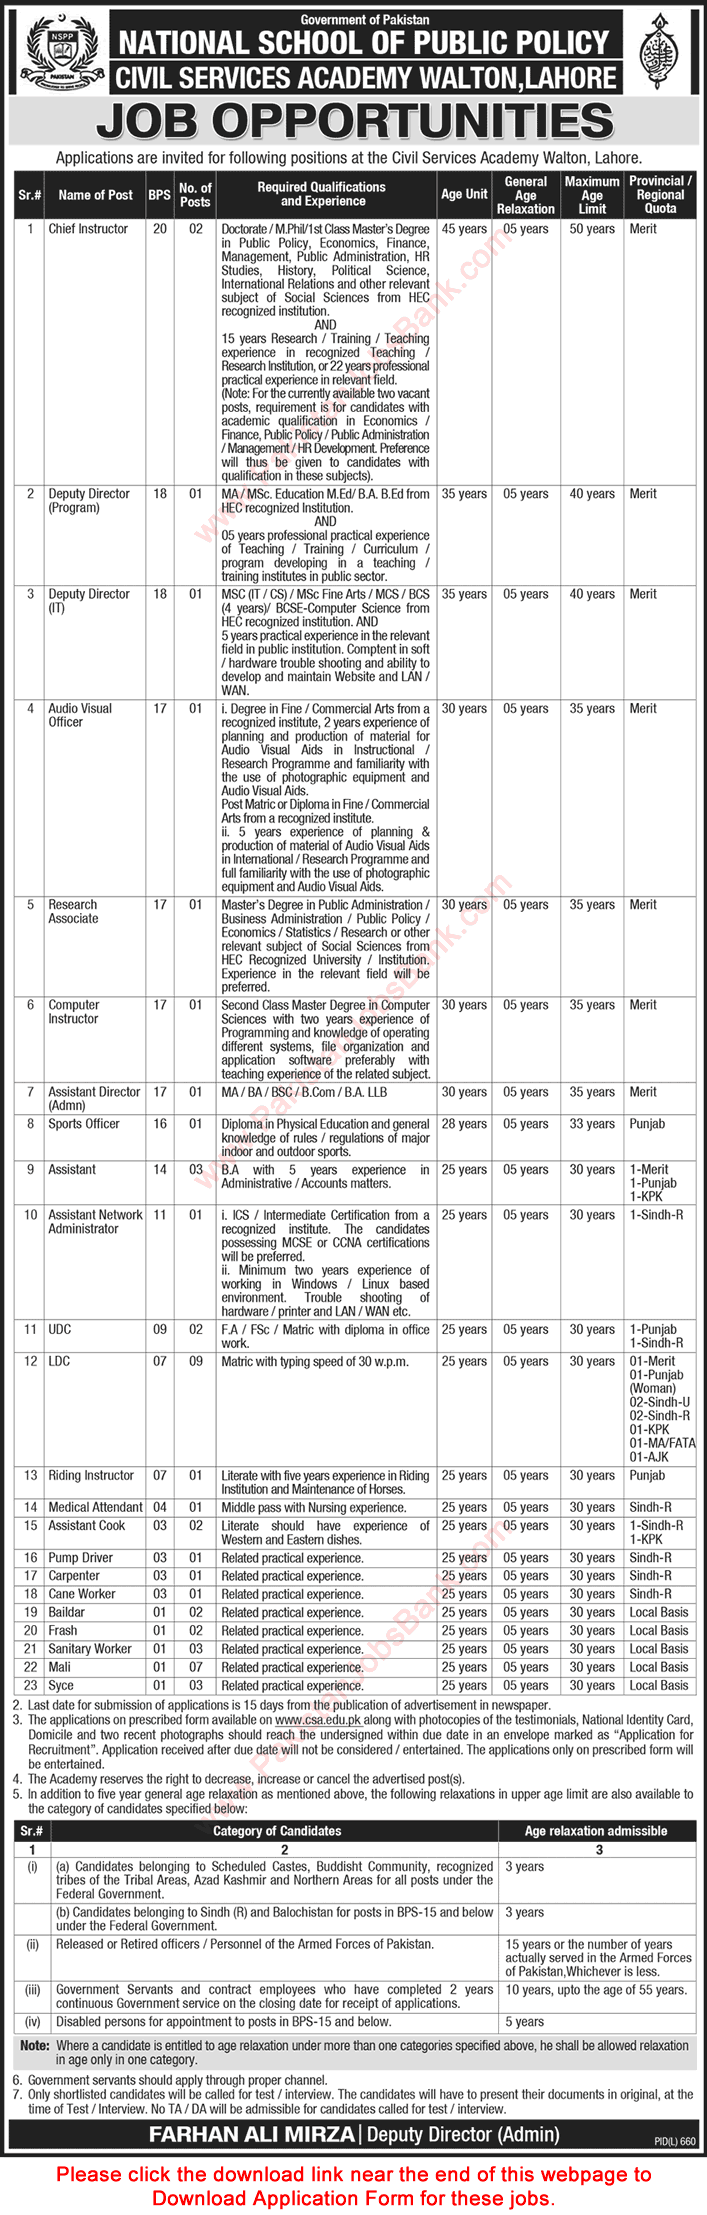 Civil Services Academy Walton Lahore Jobs 2015 September Application Form Download Latest